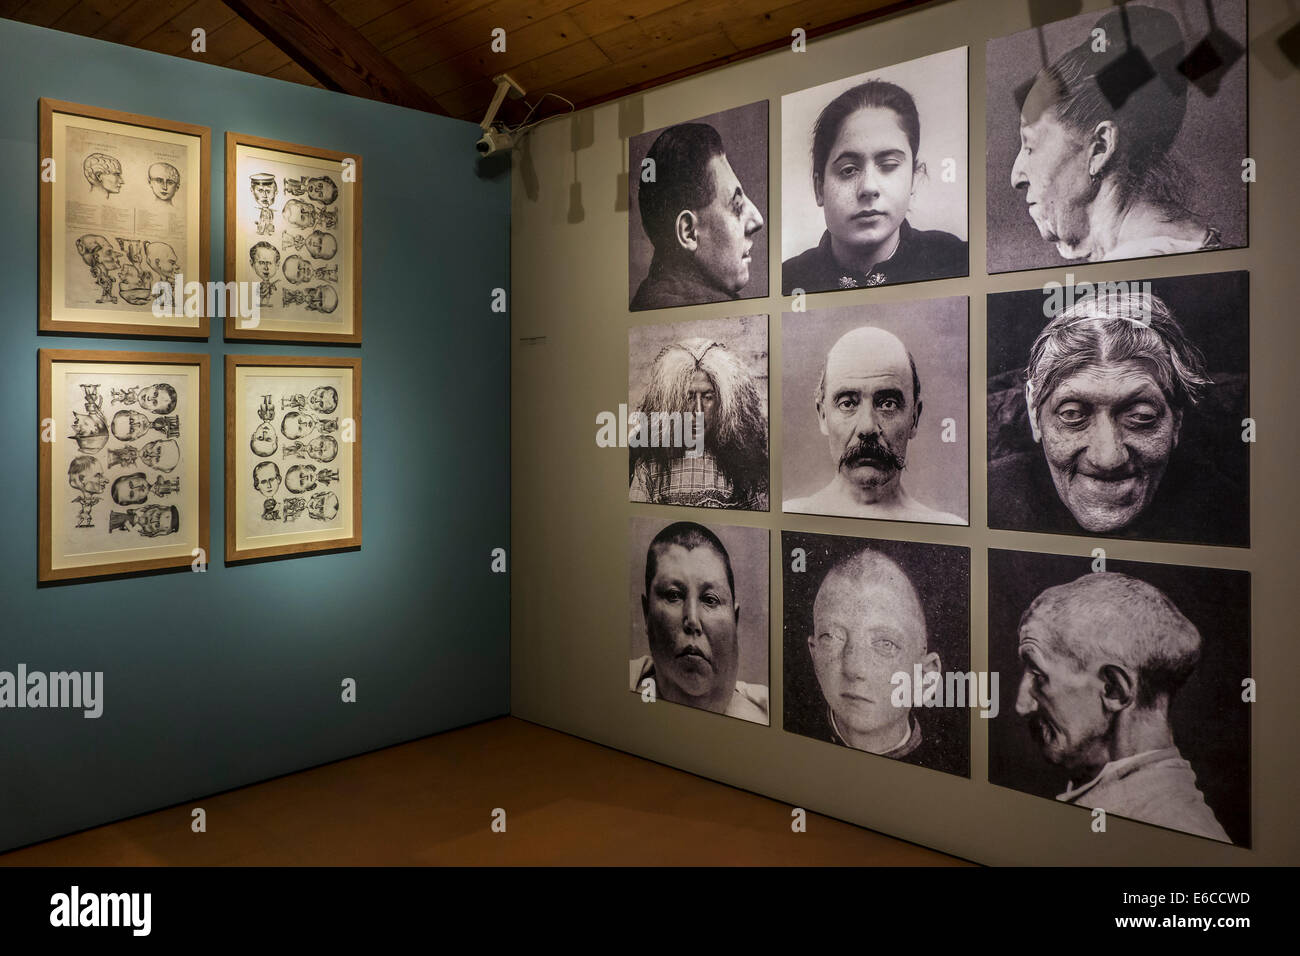 Psychiatrische Patienten in der Dr. Guislain Museum über die Geschichte der Psychiatrie in der ehemaligen Guislain Hospiz, Gent, Belgien Stockfoto